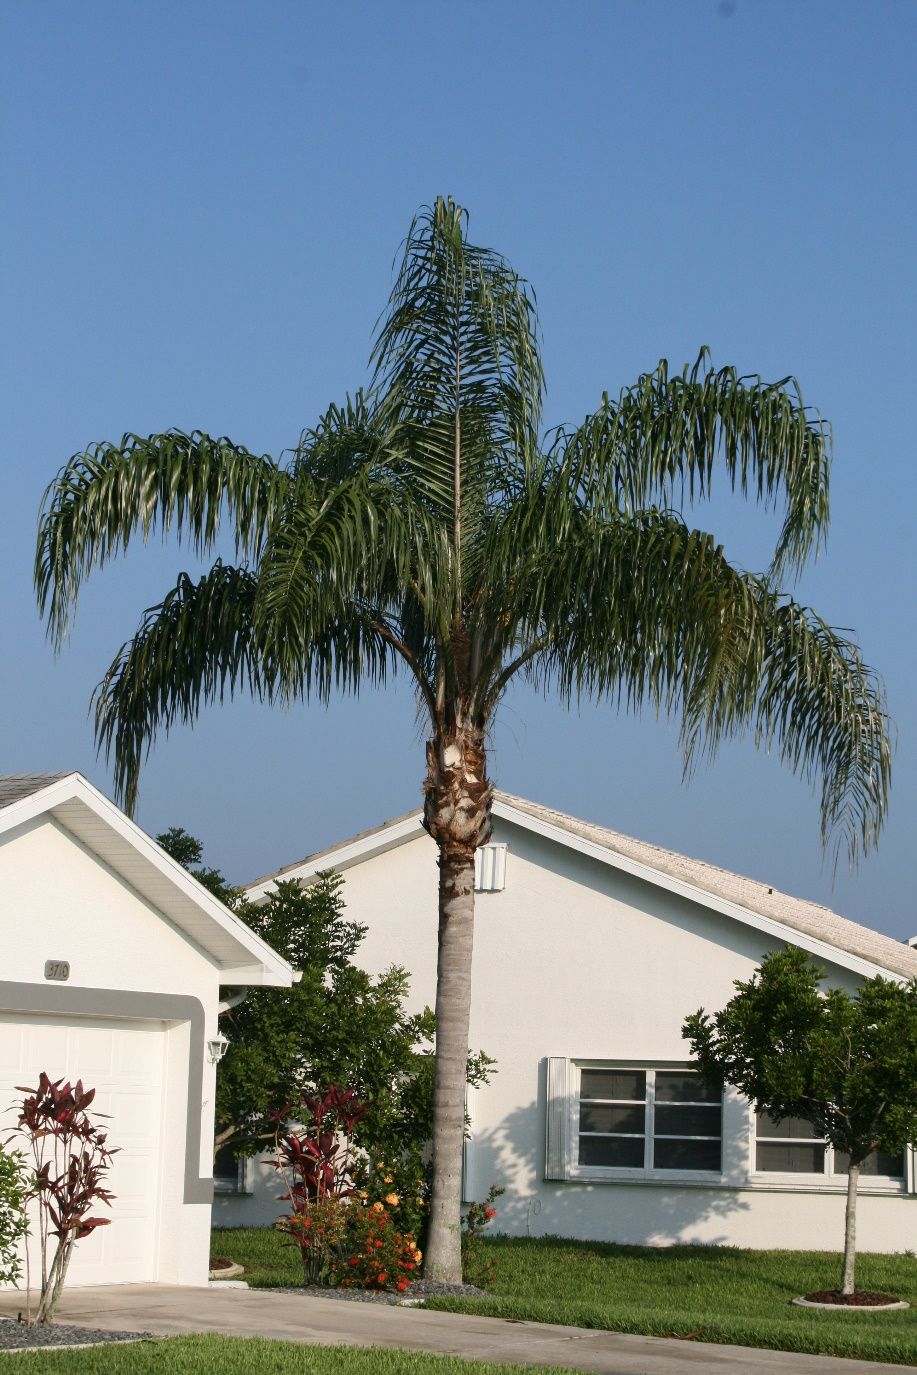 Queen palm, Syagrus romanzoffiana.